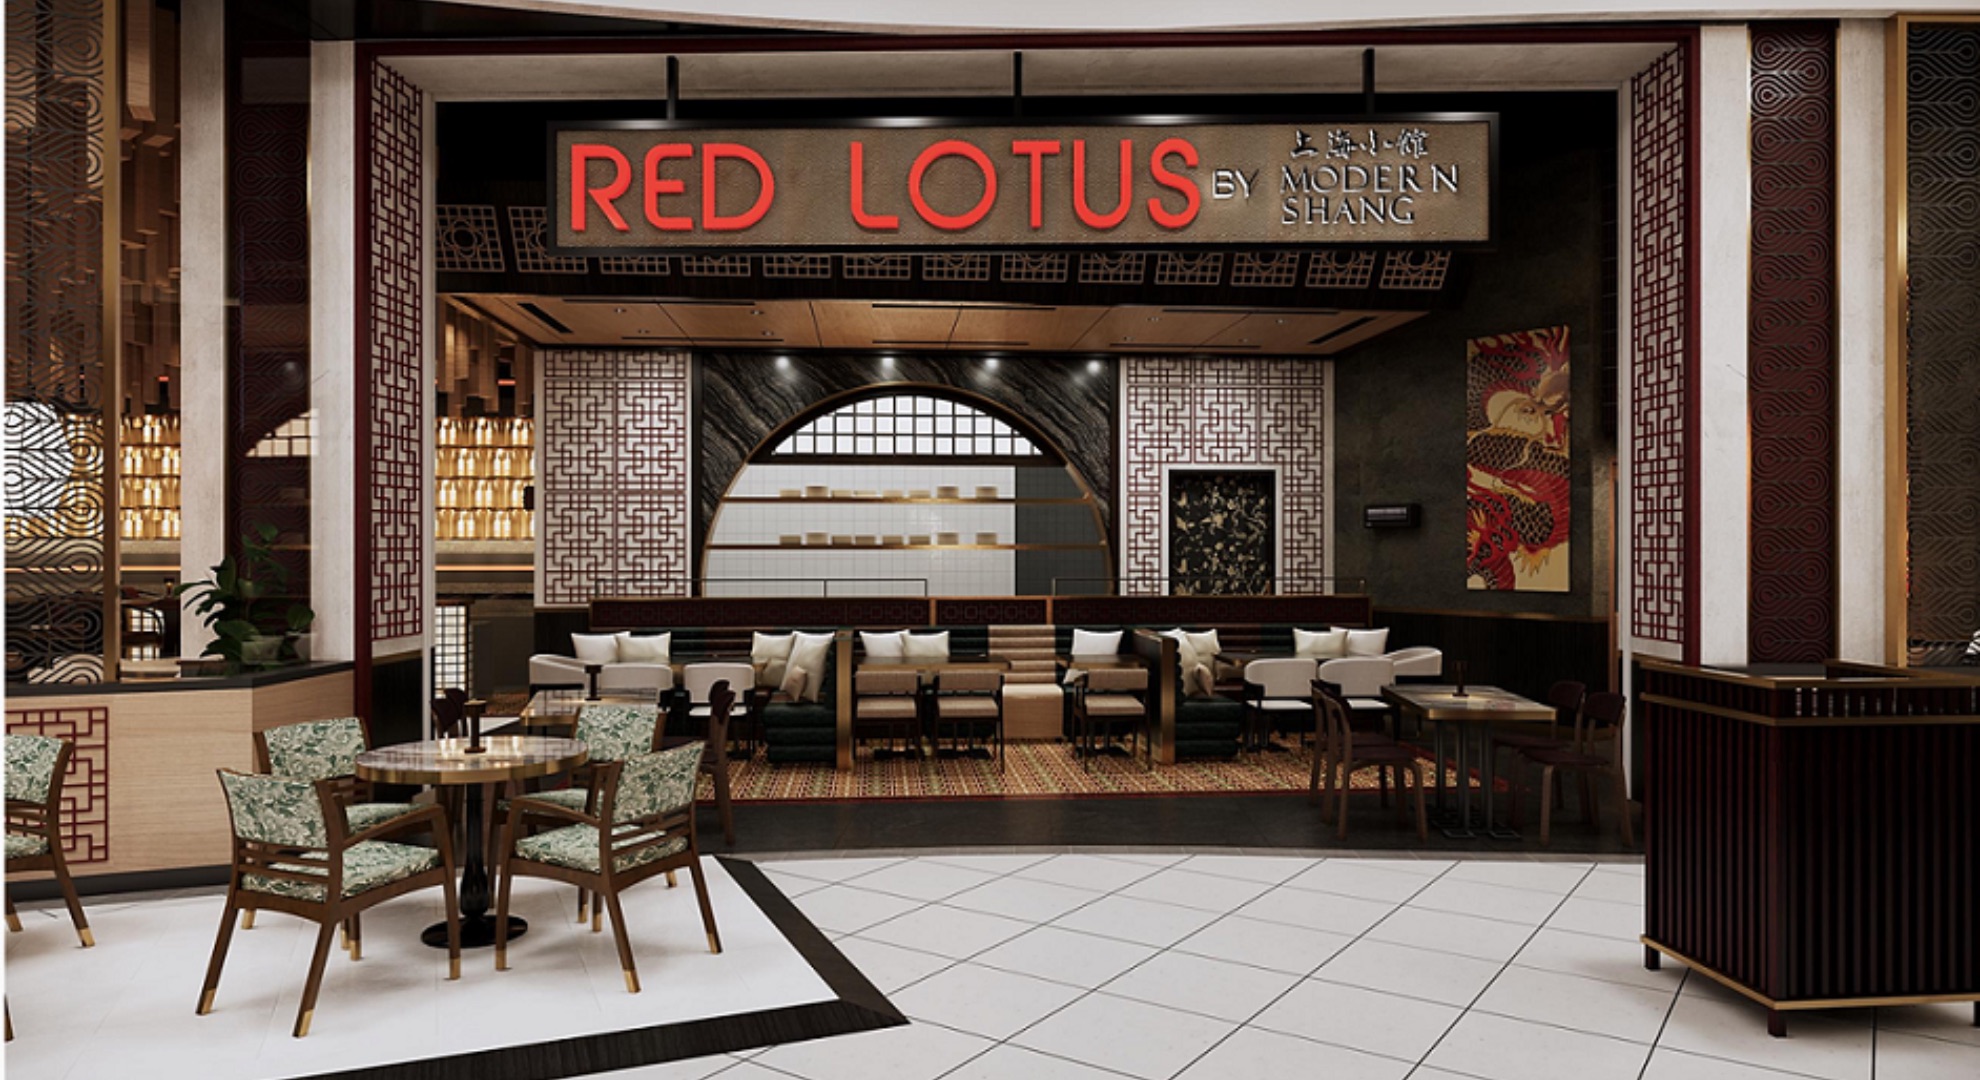 Modern chic Chinese resto-bar Red Lotus by Modern Shang blooms at BGC